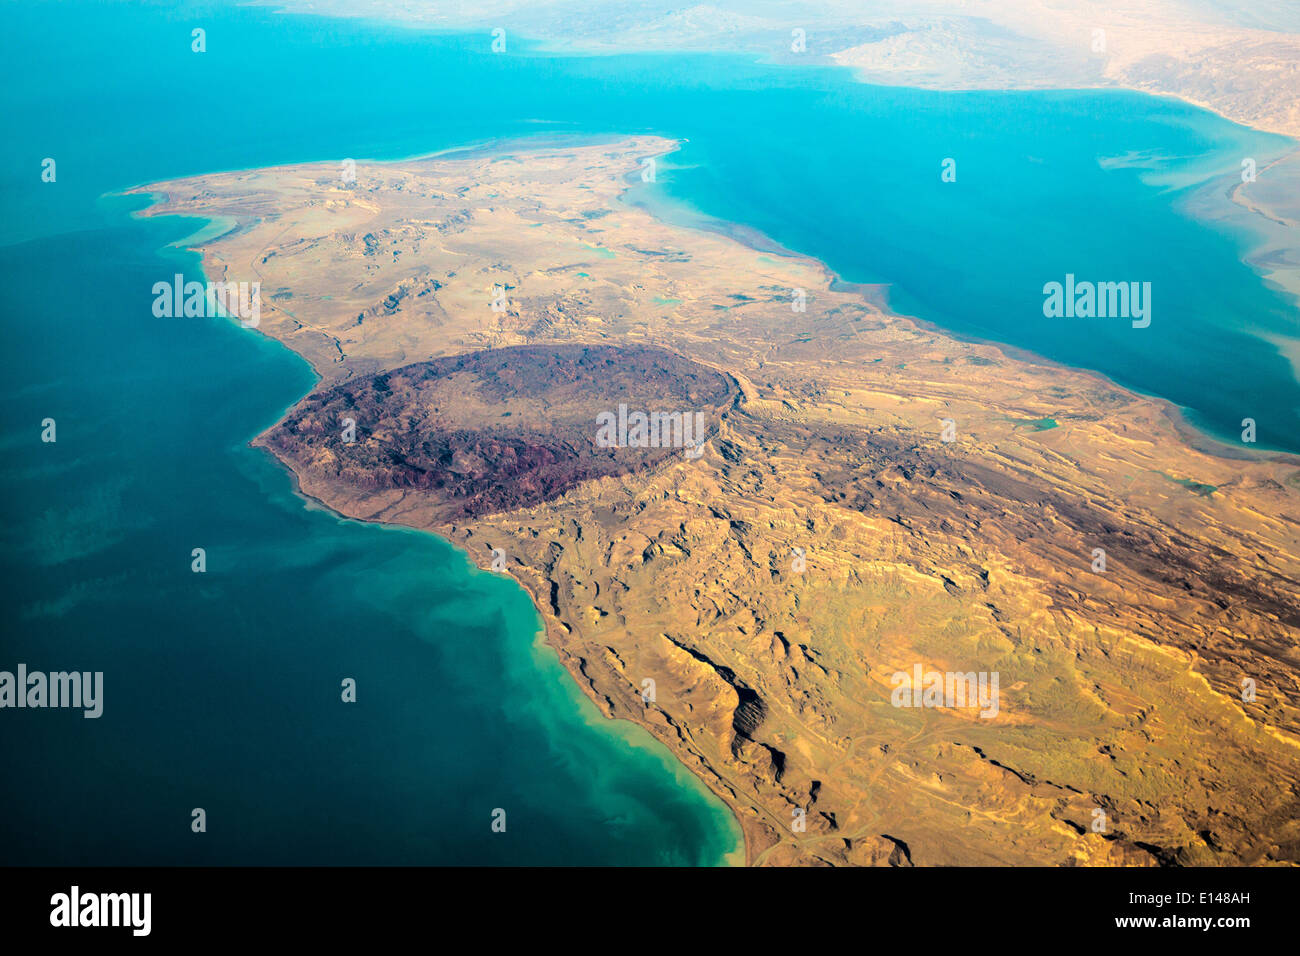 Los Emiratos Árabes Unidos, Dubai, ver en la costa del sur de Irán, cerca del Golfo Pérsico o Árabe. Antena Foto de stock